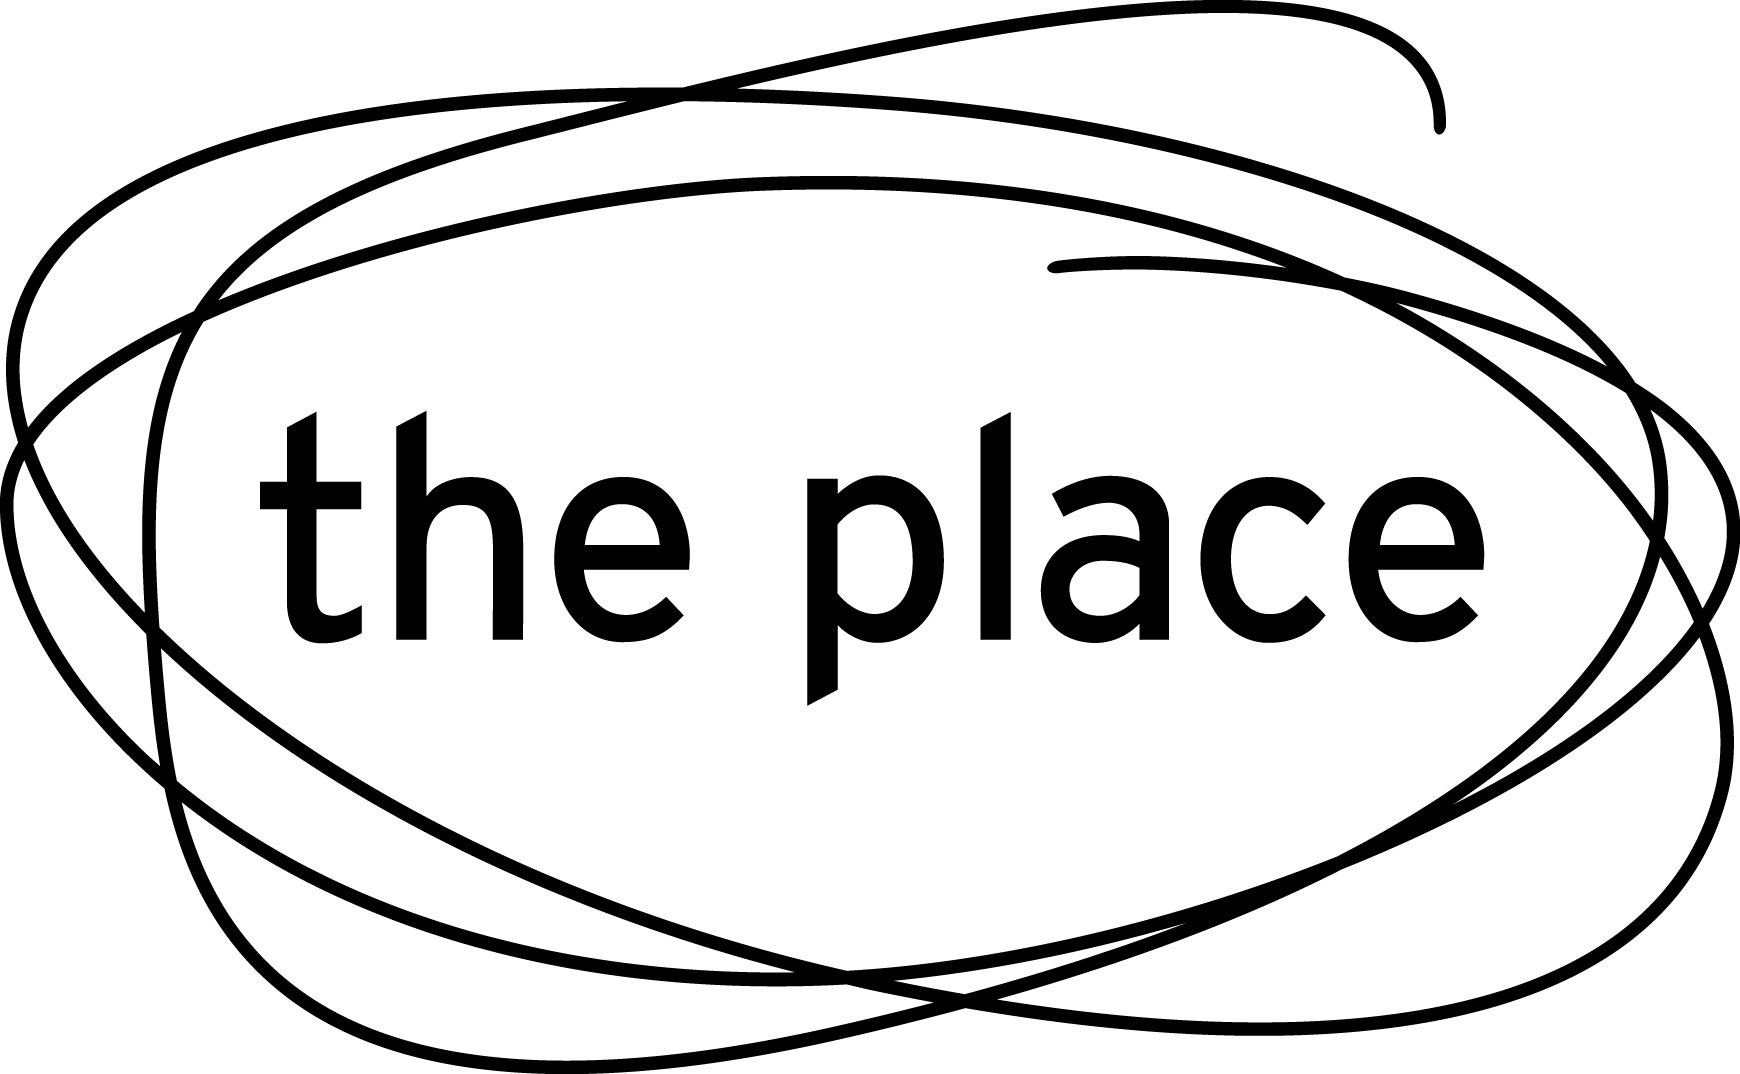 THE-PLACE-logo.jpg